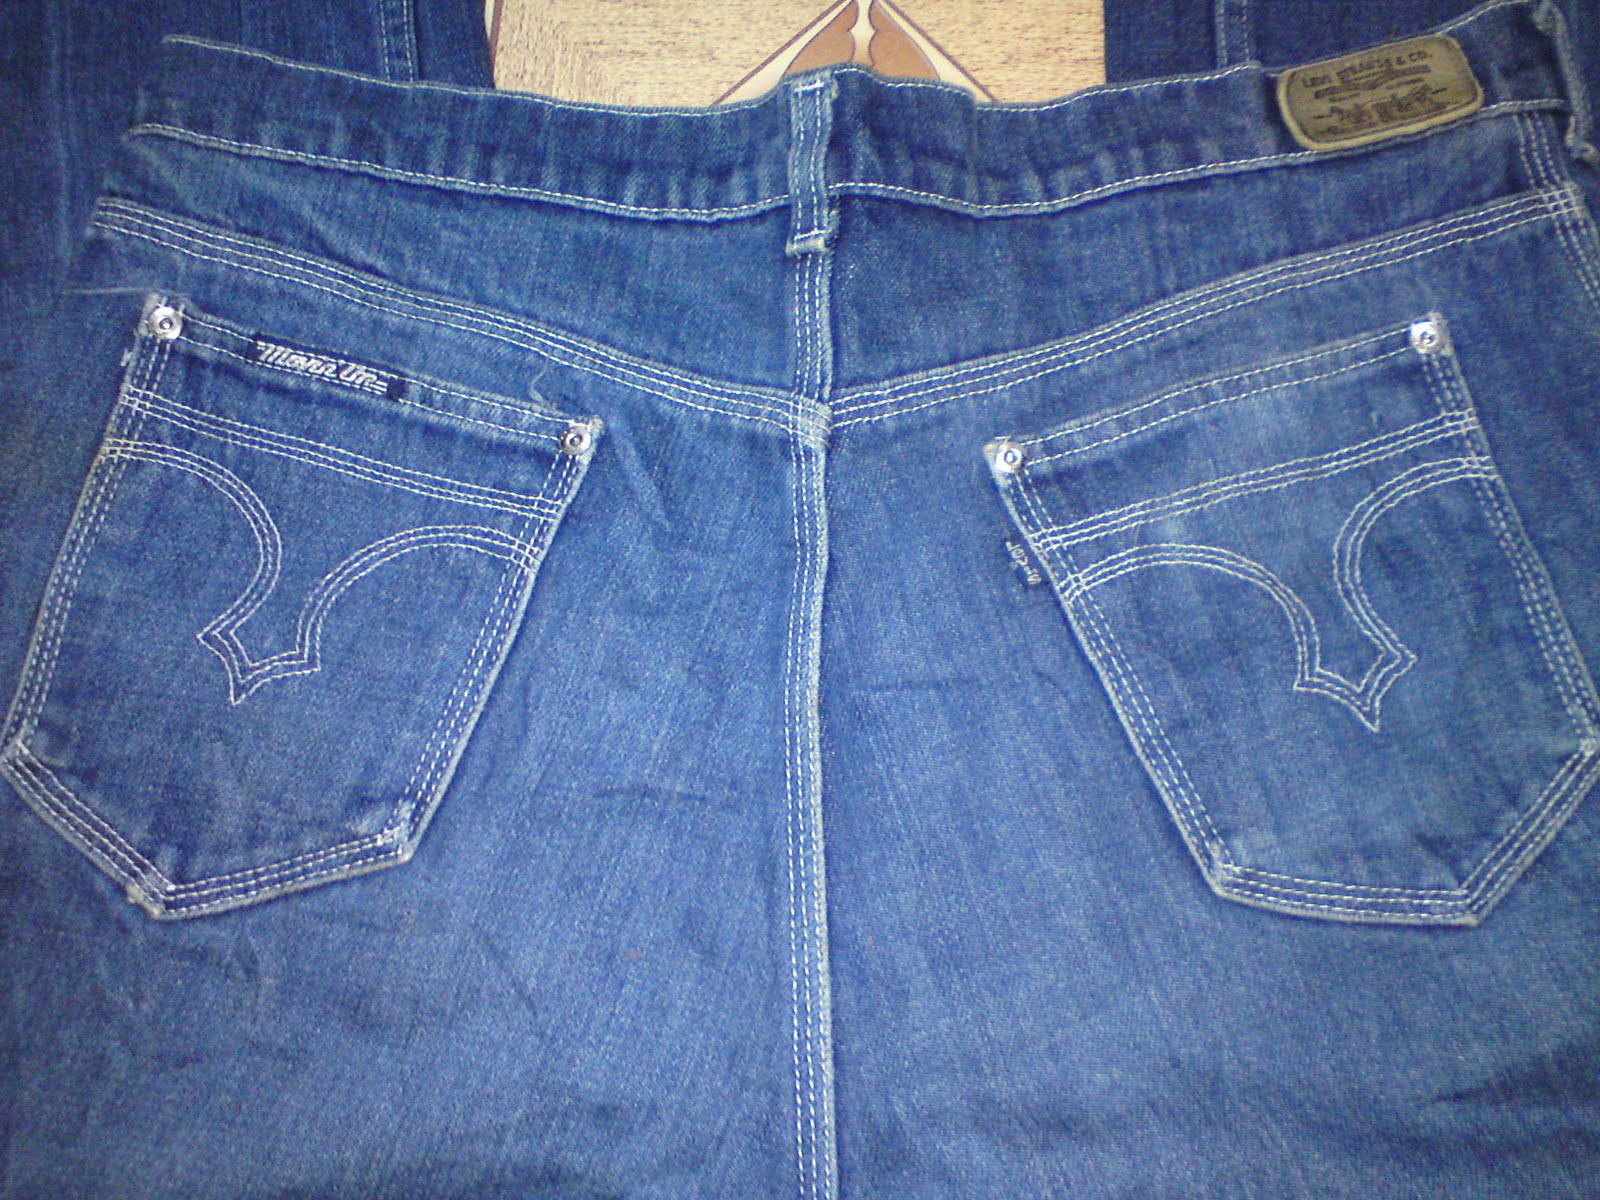 BEGINNER DIVER: RARE vintage USA levis moving on blue tab jeans.(SOLD).